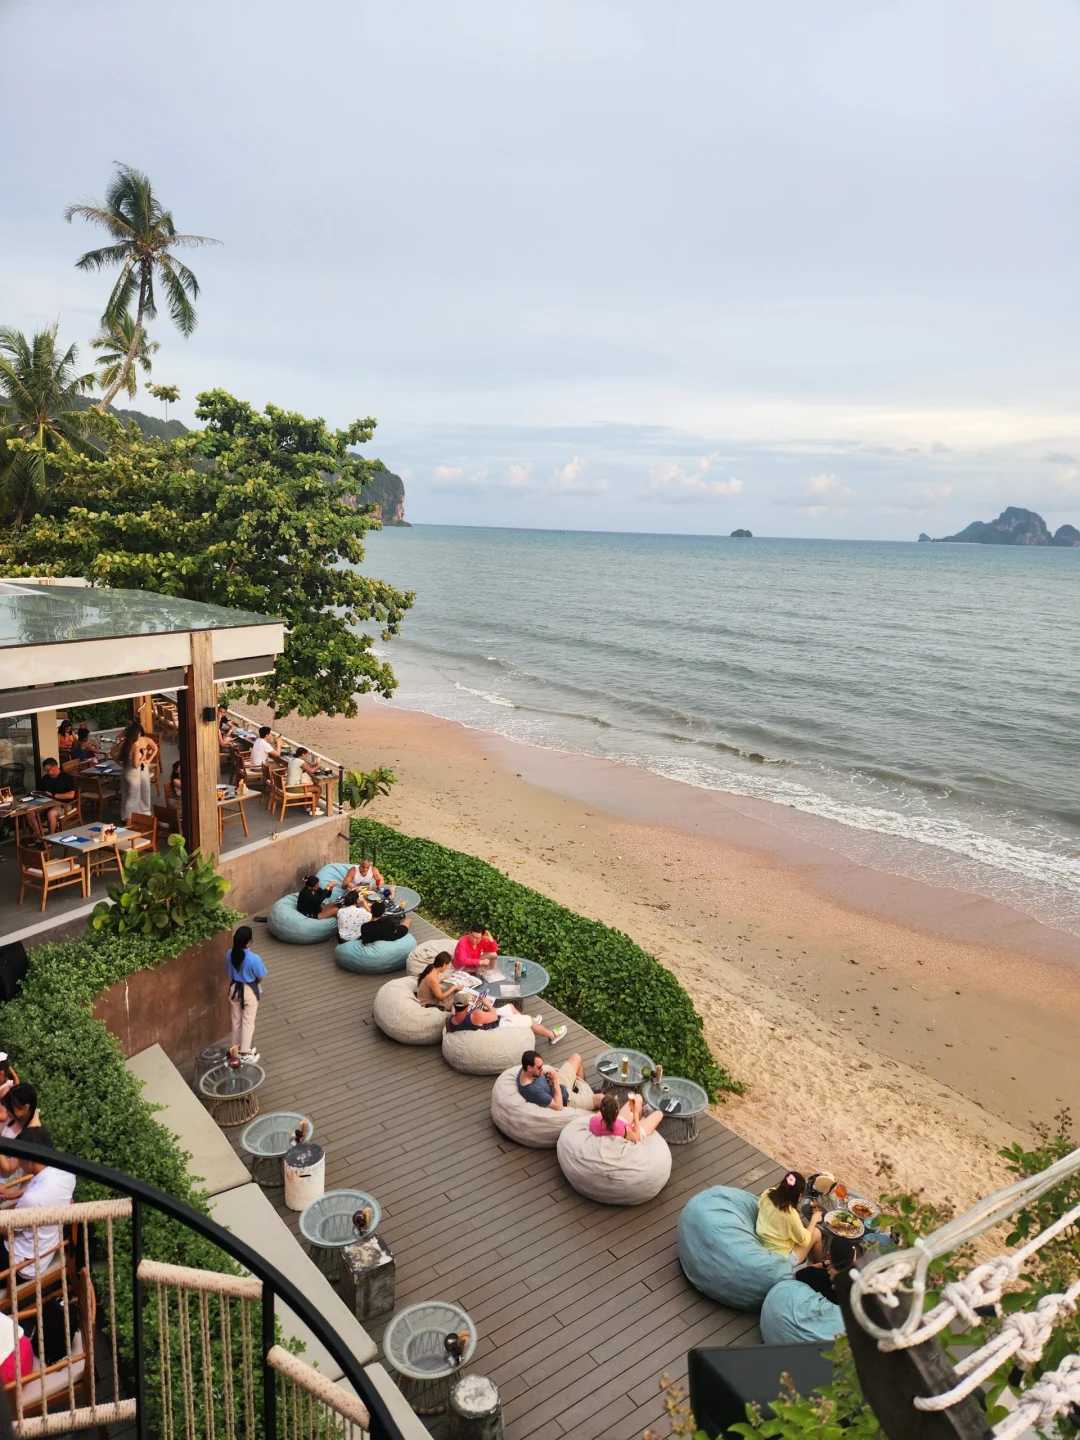 Krabi-An unforgettable Father's Day, Krabi's most beautiful sunset seaside restaurant Reeve